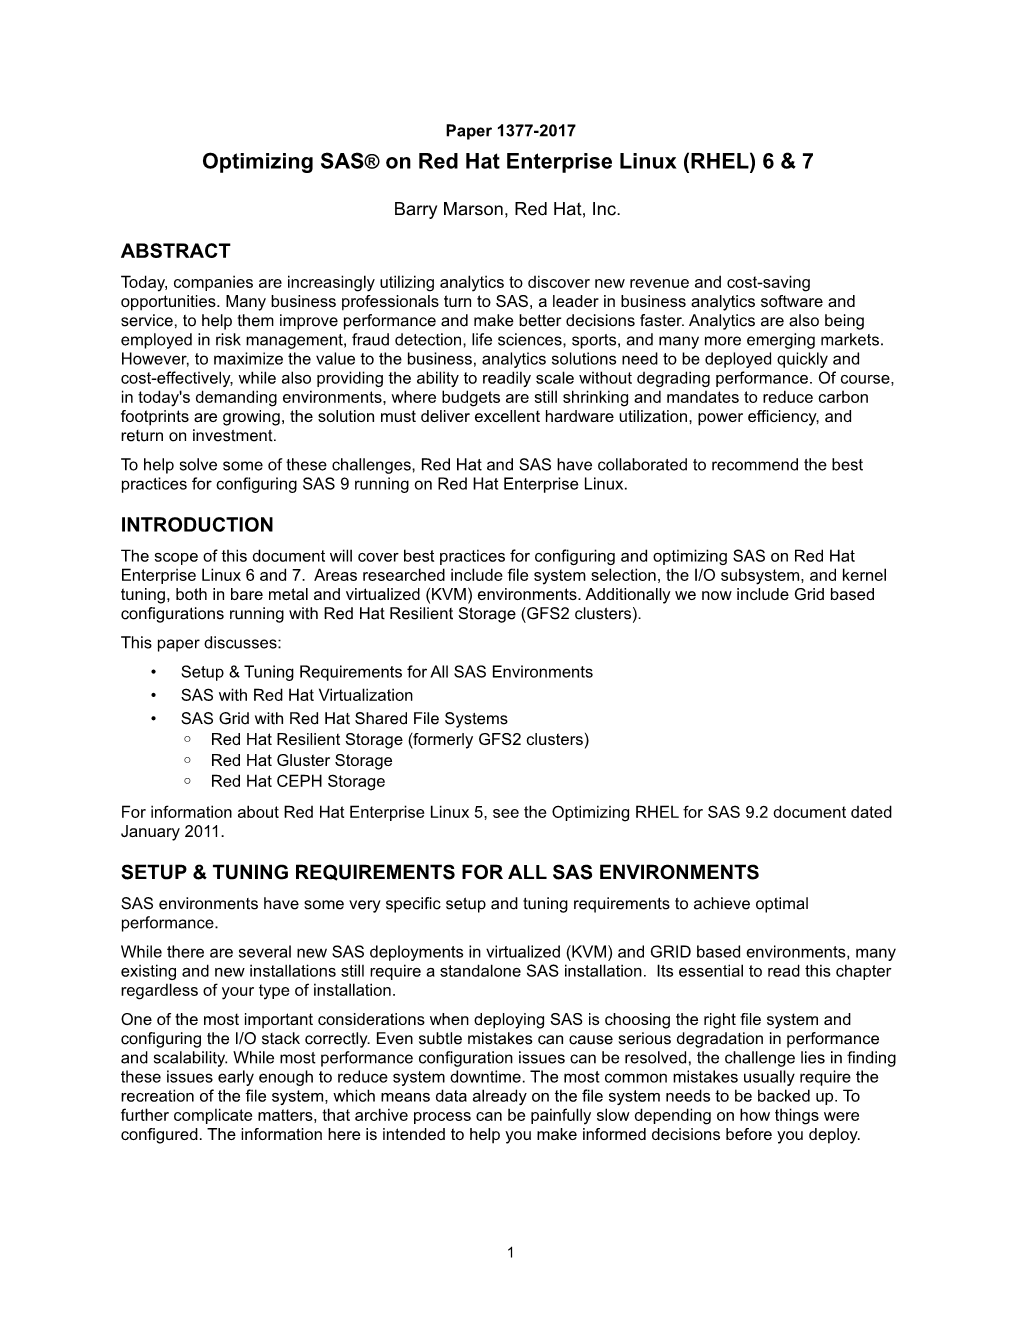 Optimizing SAS® on Red Hat Enterprise Linux (RHEL) 6 & 7